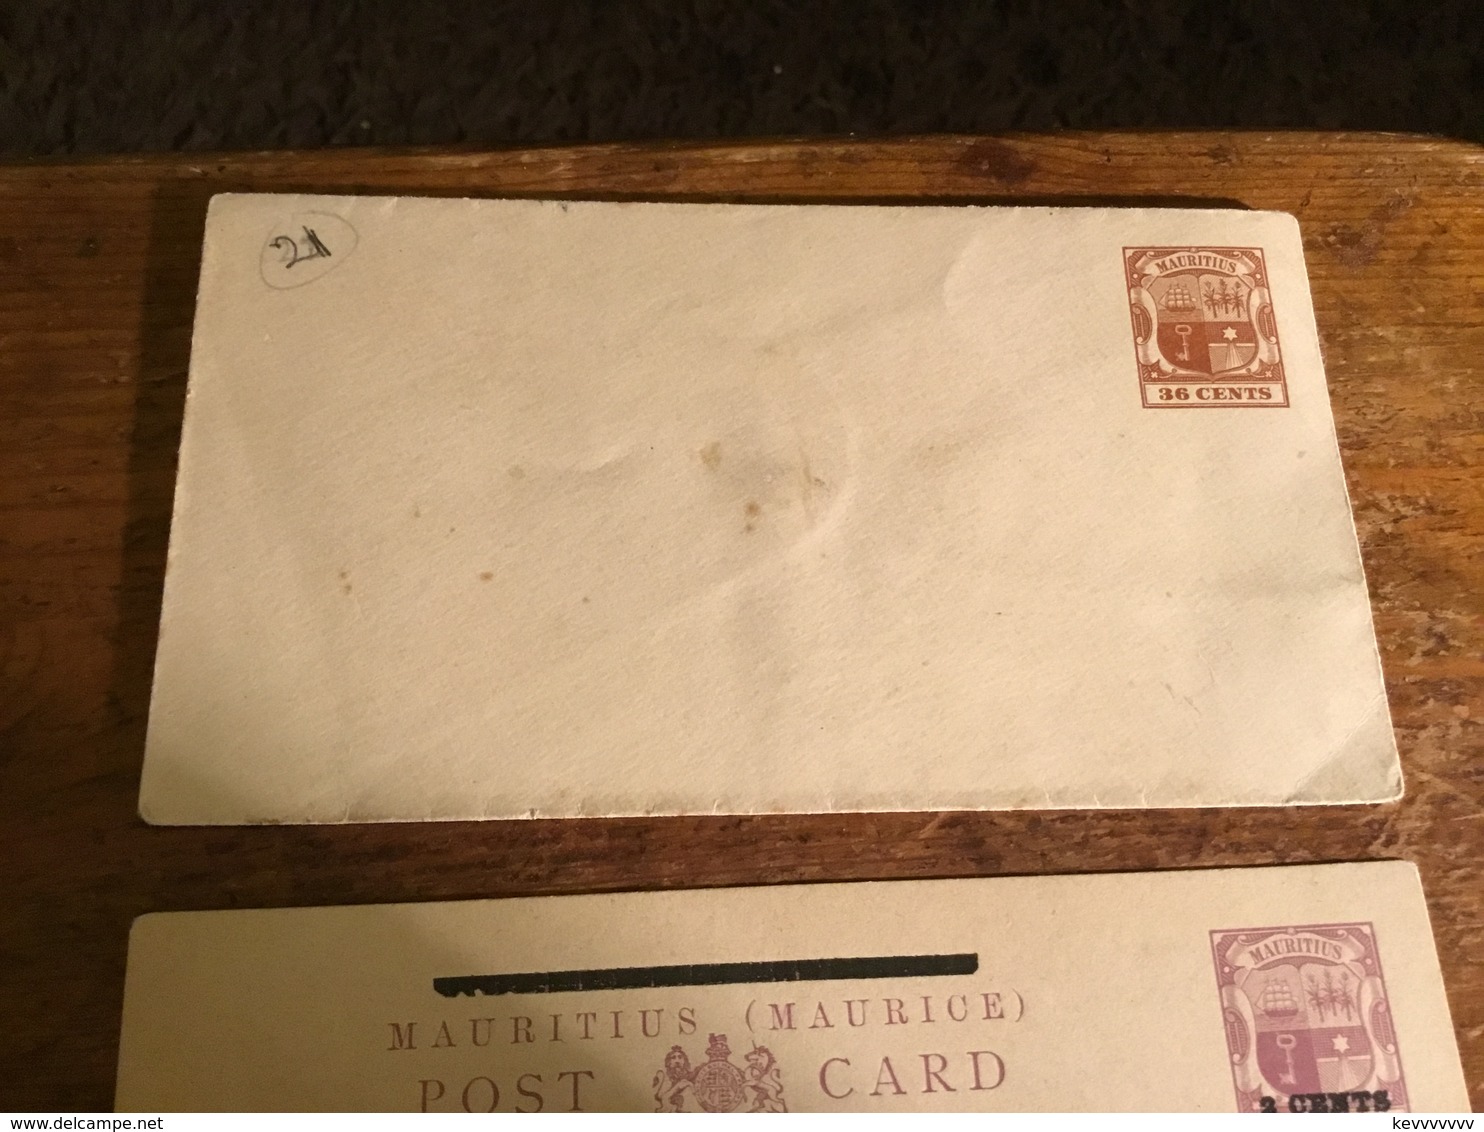 Mauritius (Maurice) 2 Cents Overprint Postcard, 36 Cents & 4 Cents Overprint Postal Stationary Envelopes - Mauritius (...-1967)